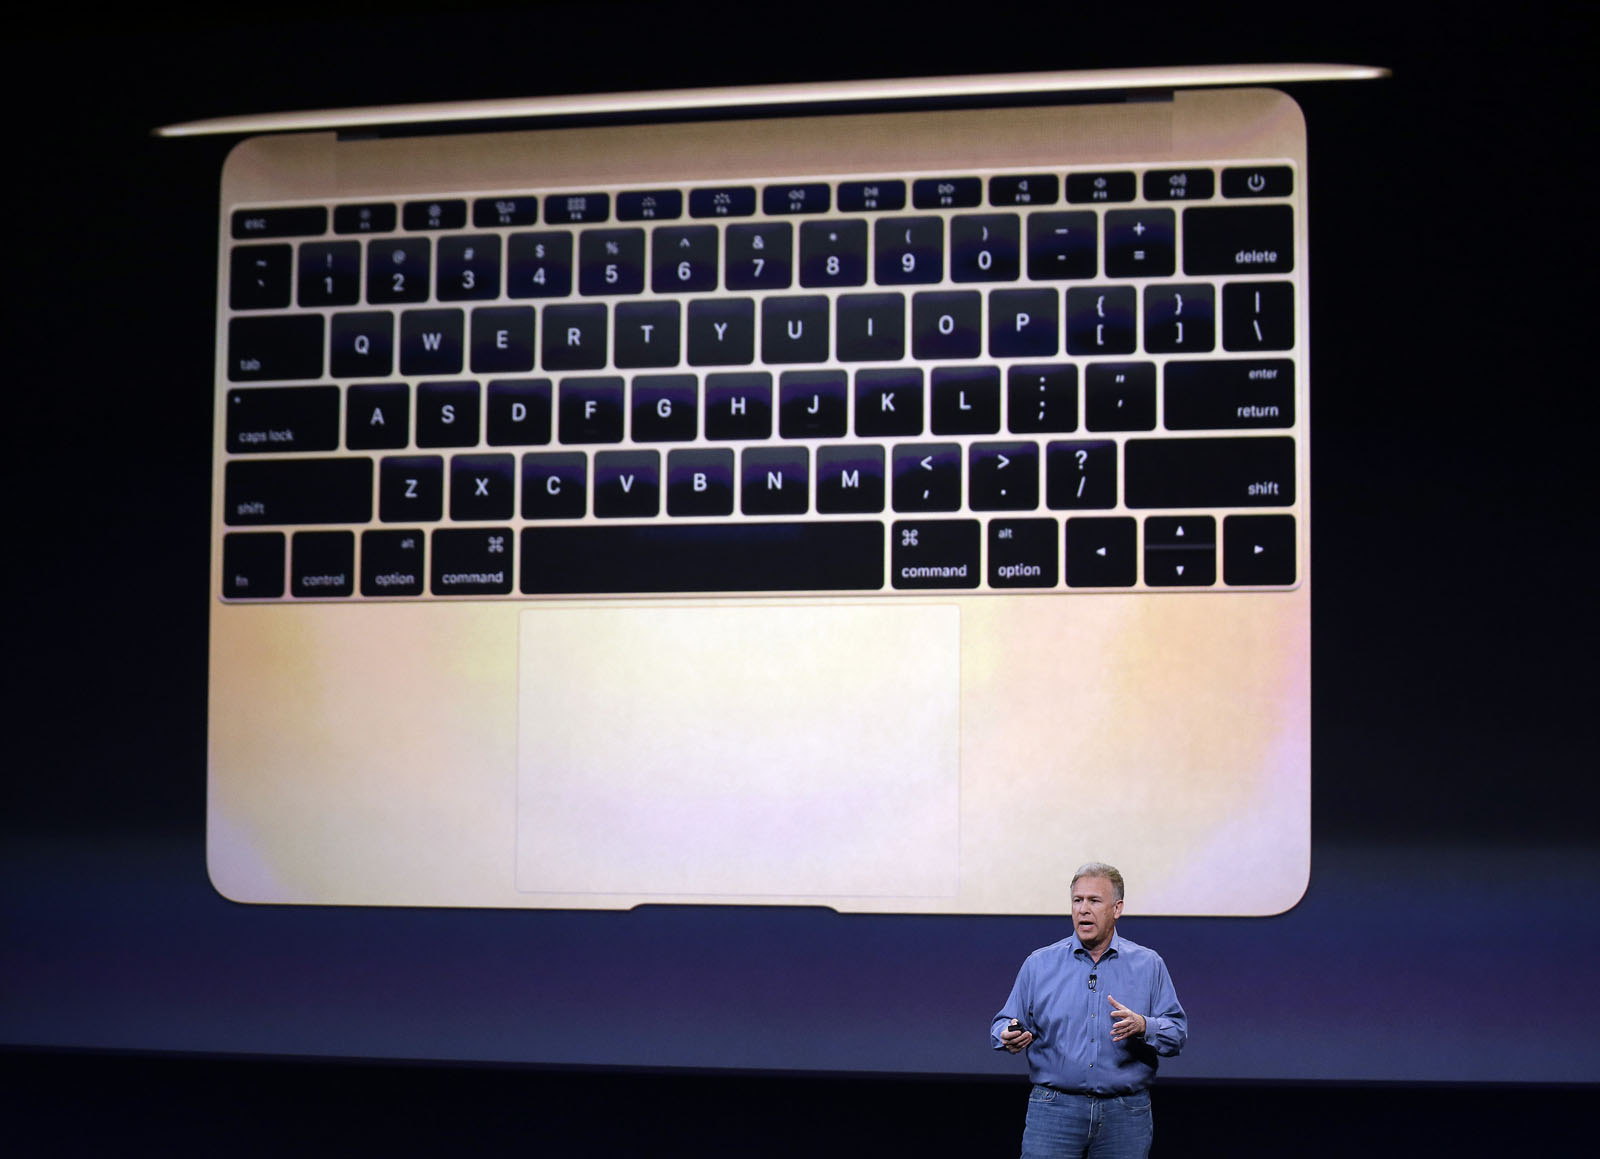 Data Doctors: Apple MacBook keyboard issues